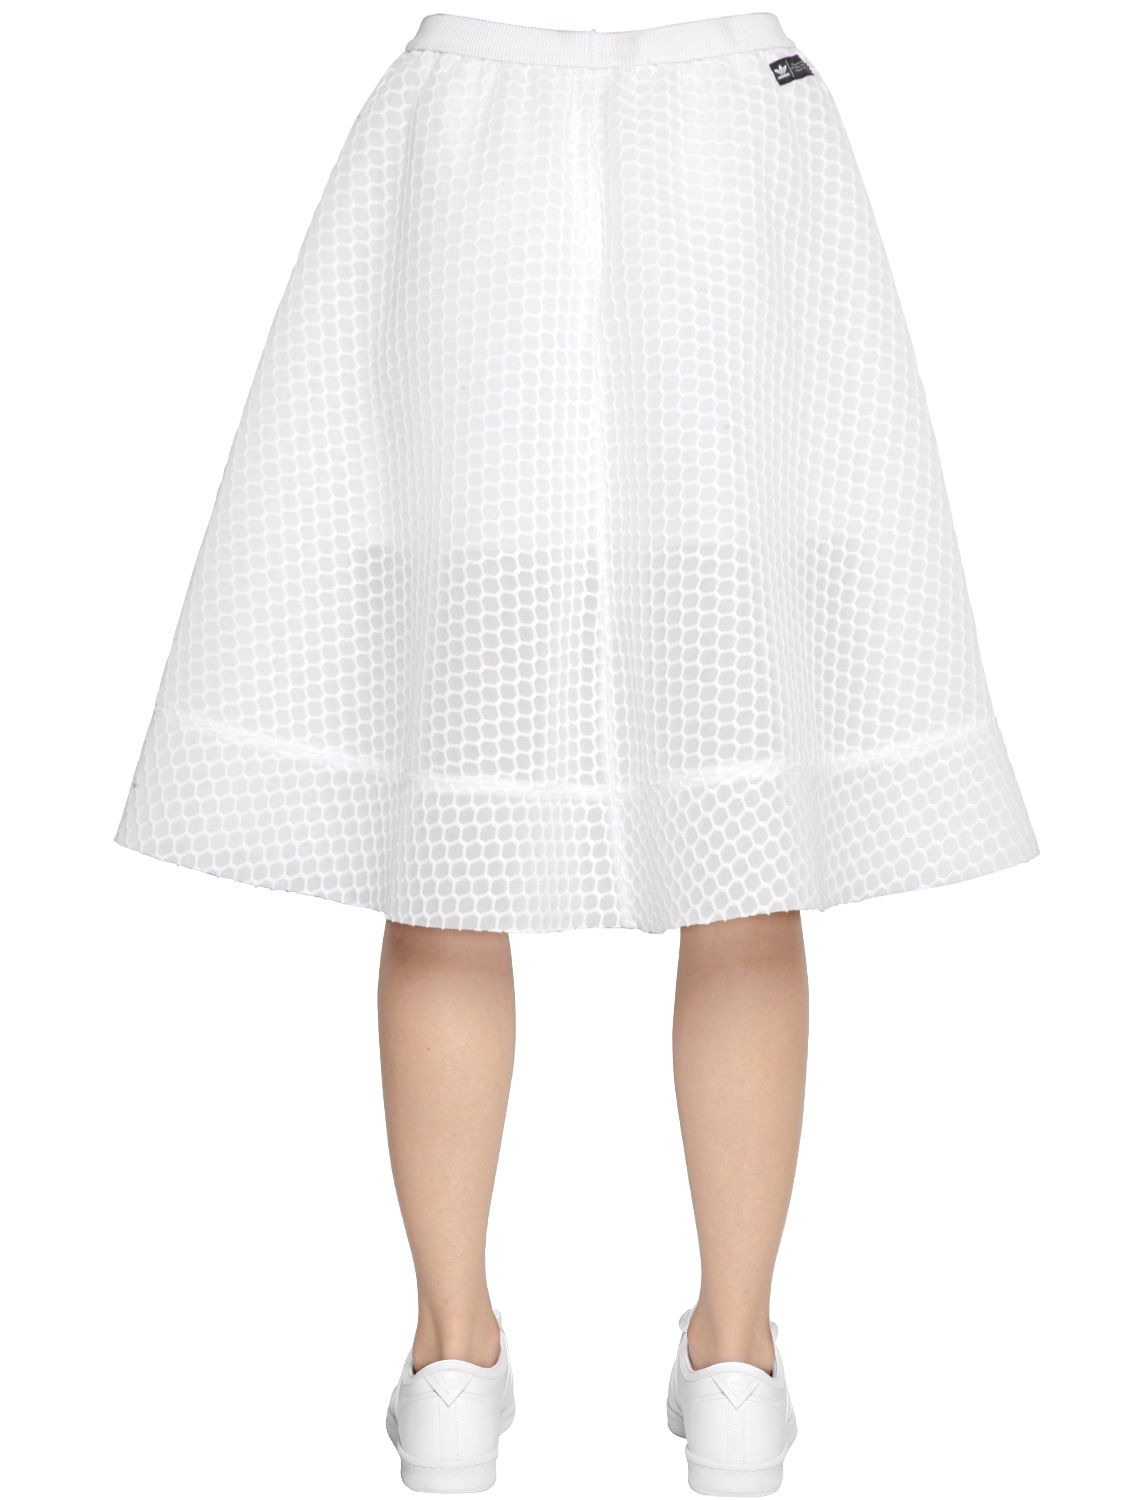 adidas Originals A-line Honeycomb Mesh Skirt in White - Lyst